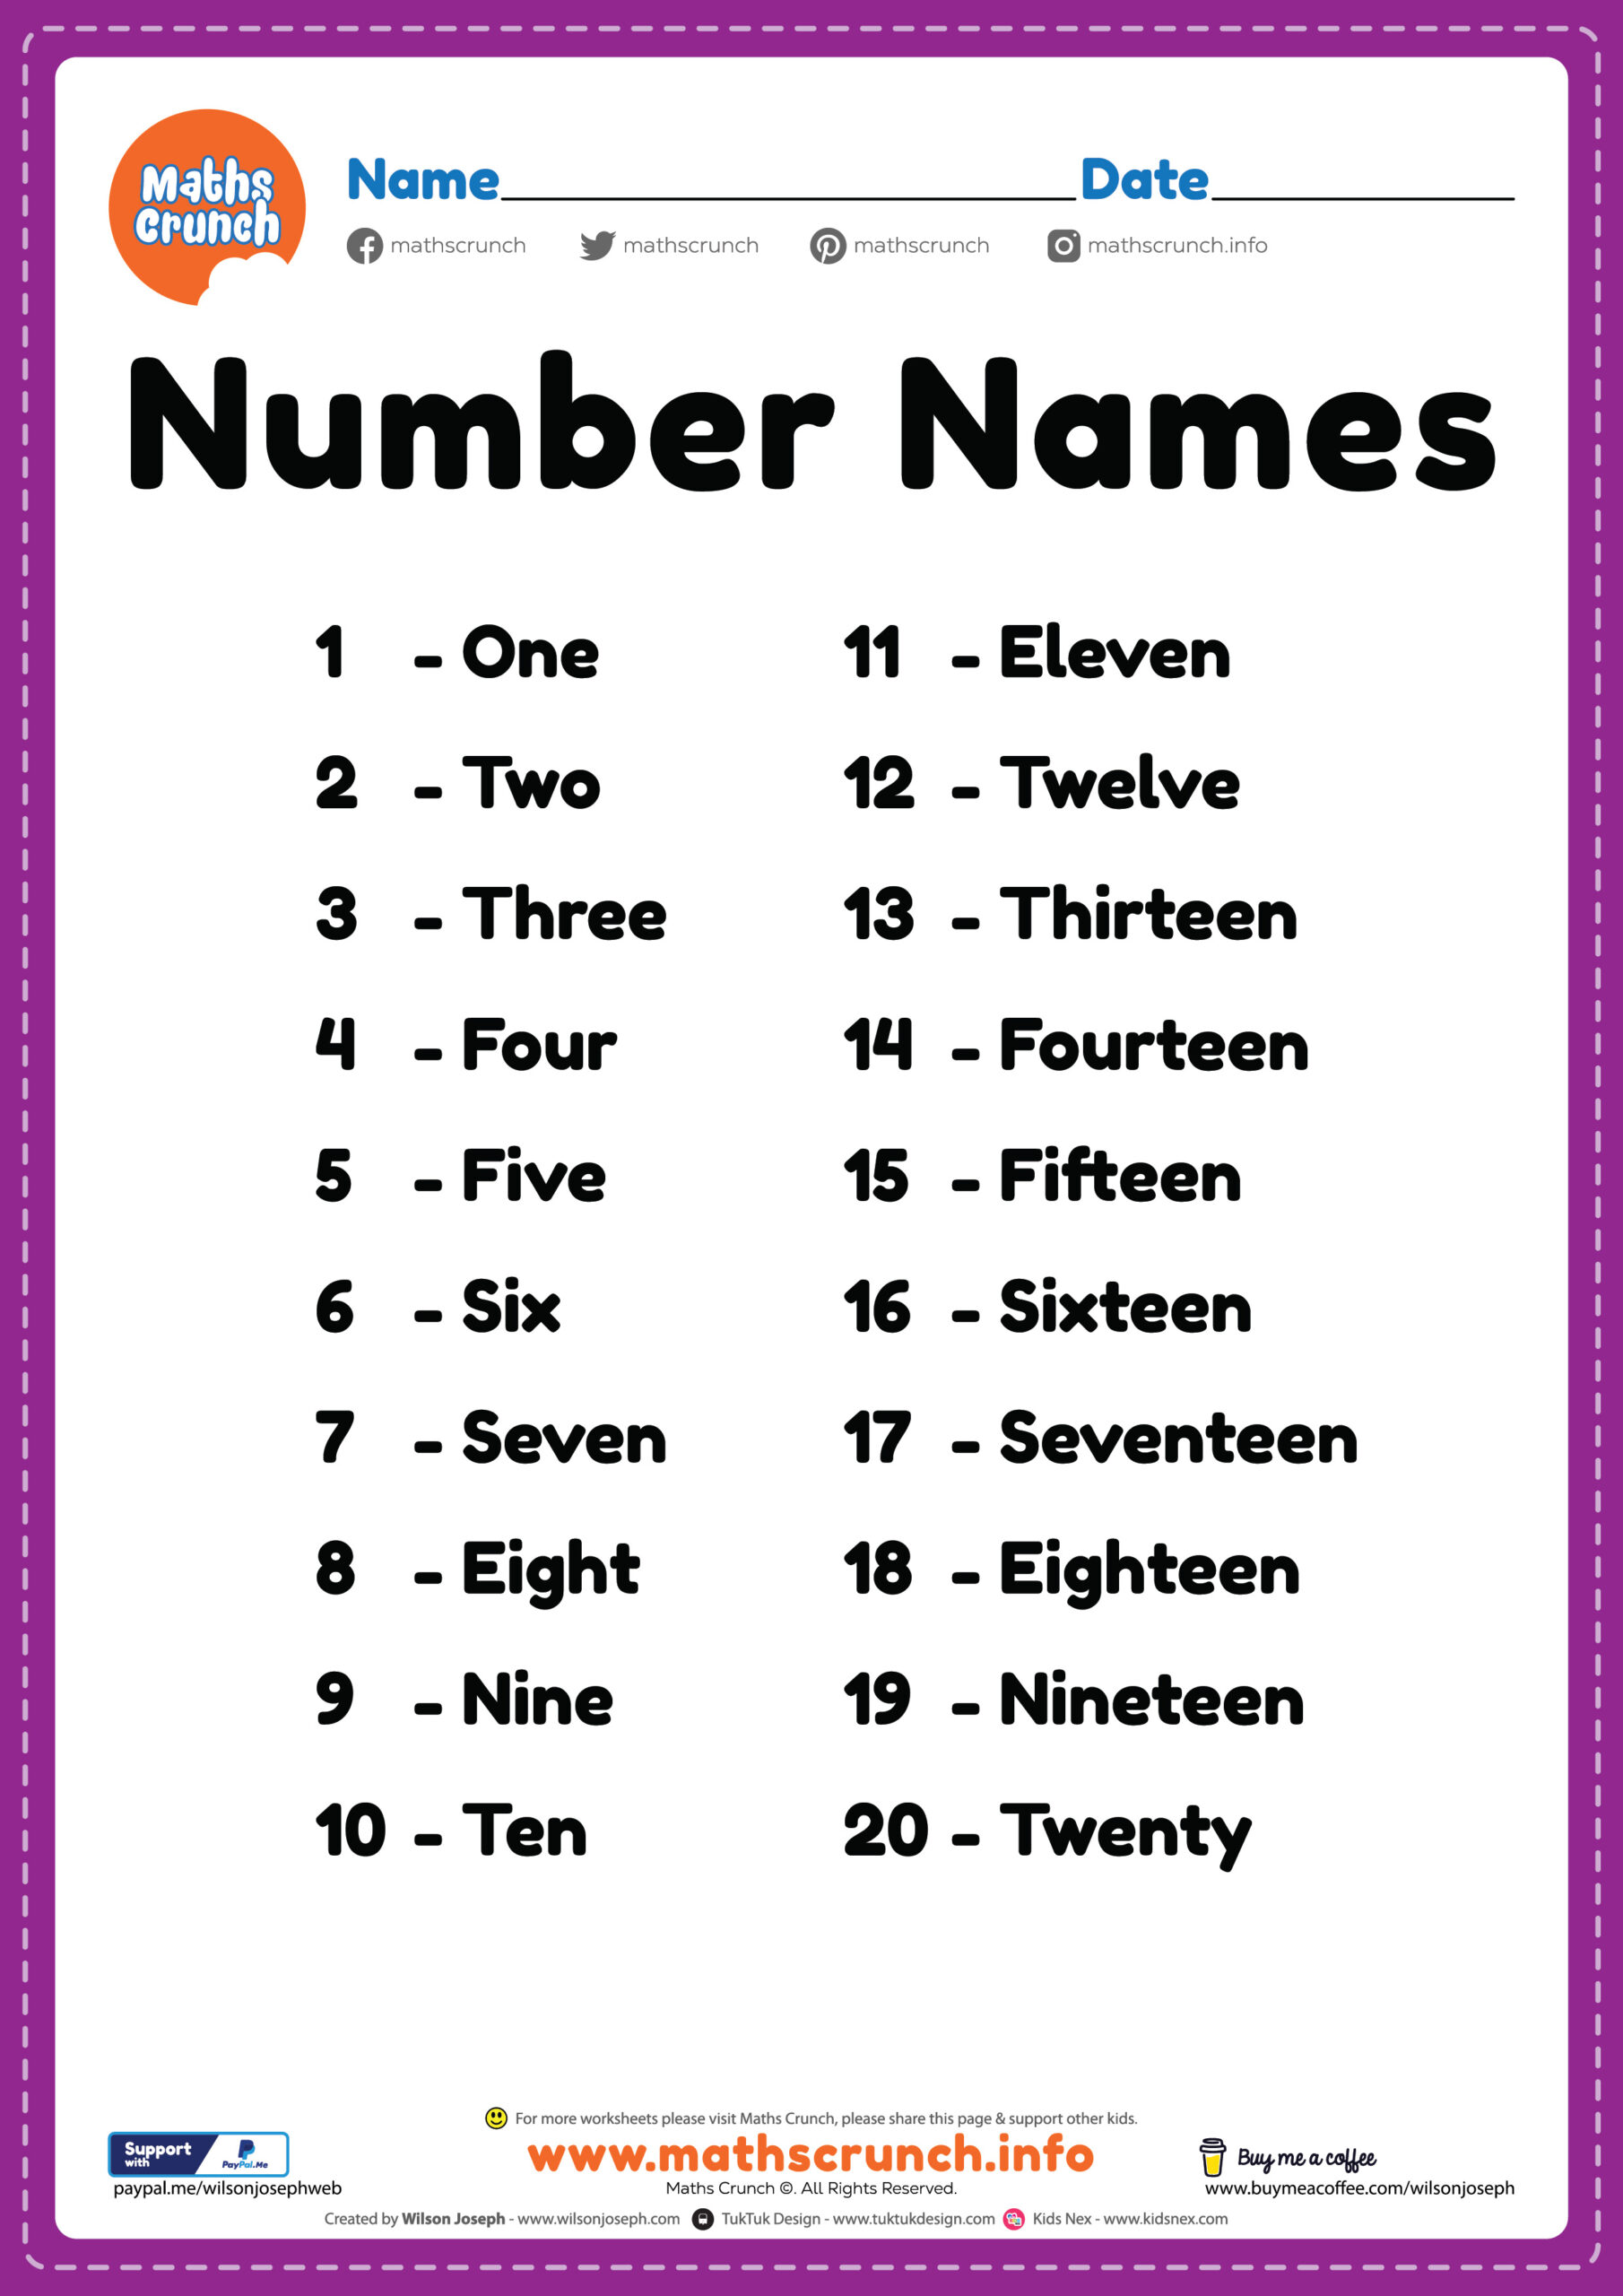 Number Names 1 - 20